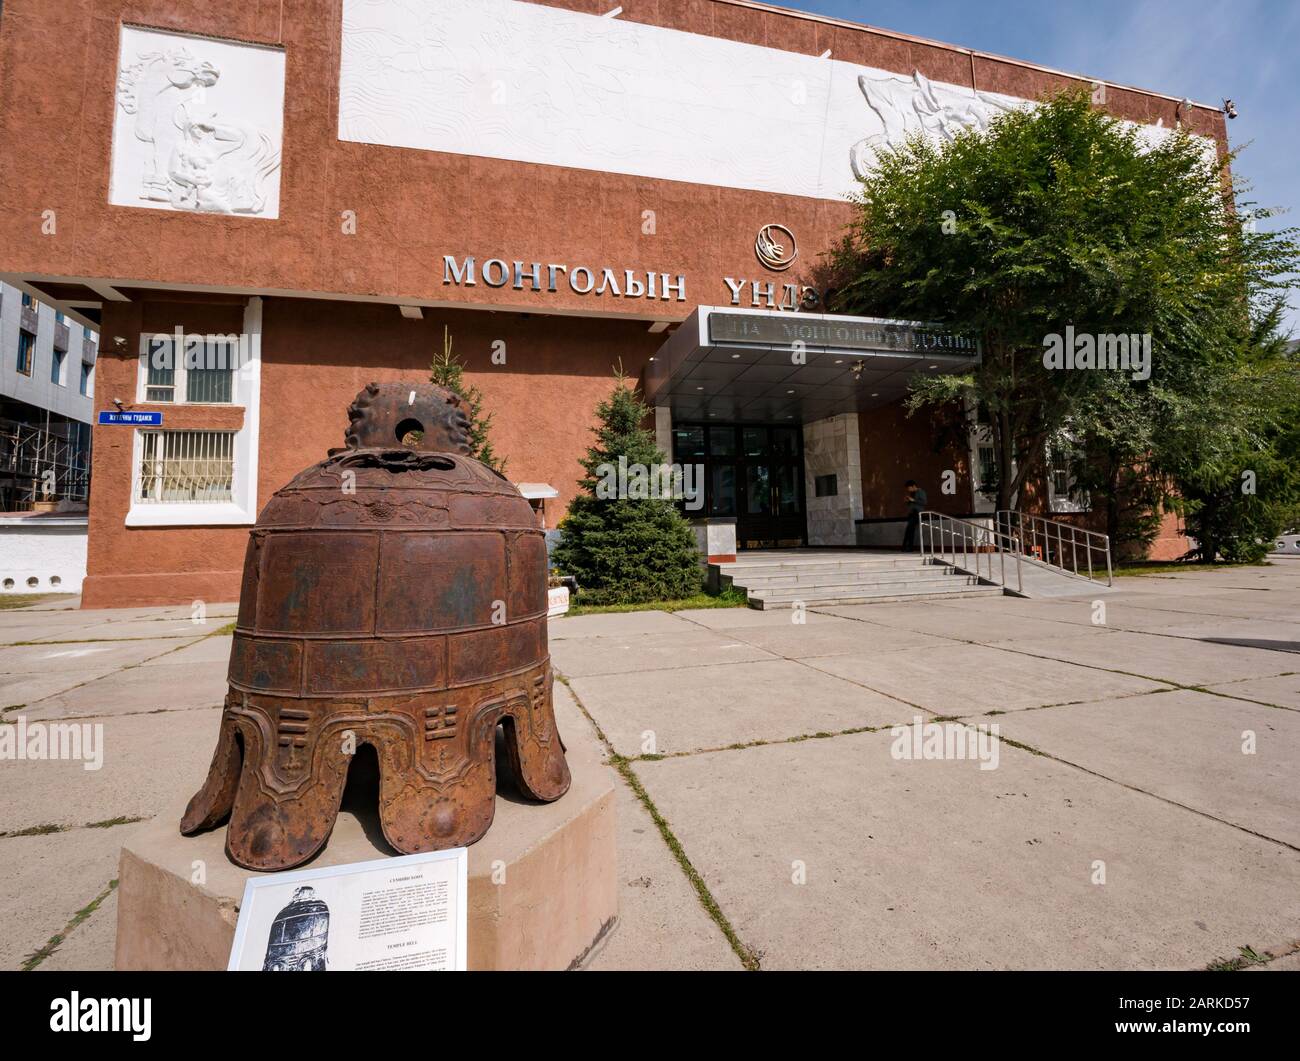 Old bronze temple bell, National Museum of Mongolia, Ulaanbaatar, Mongolia Stock Photo